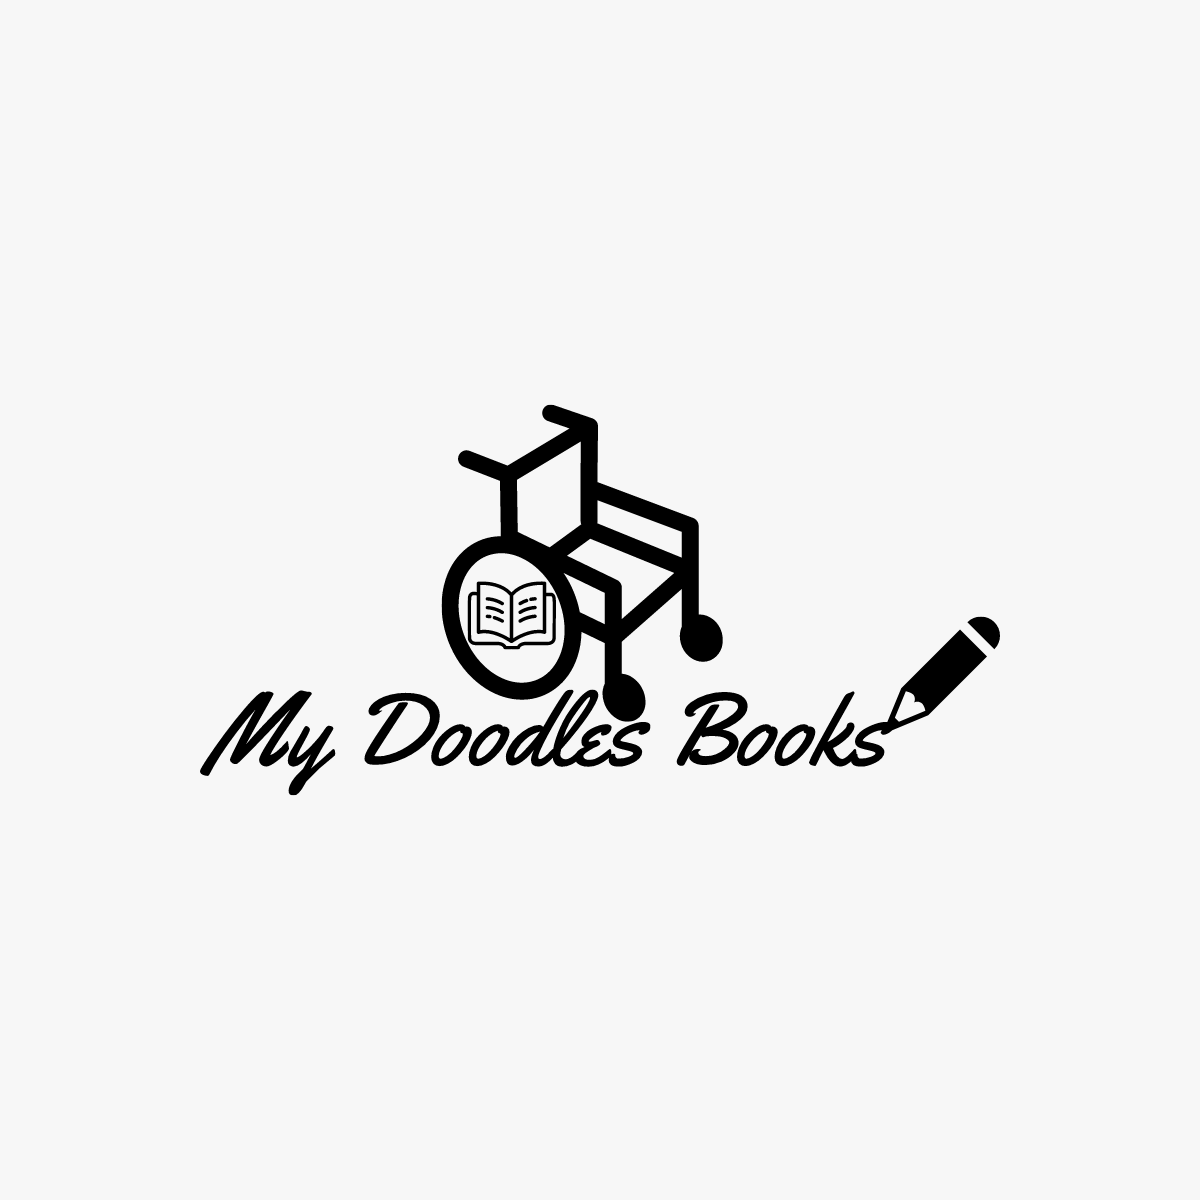 My Doodles Books's logo